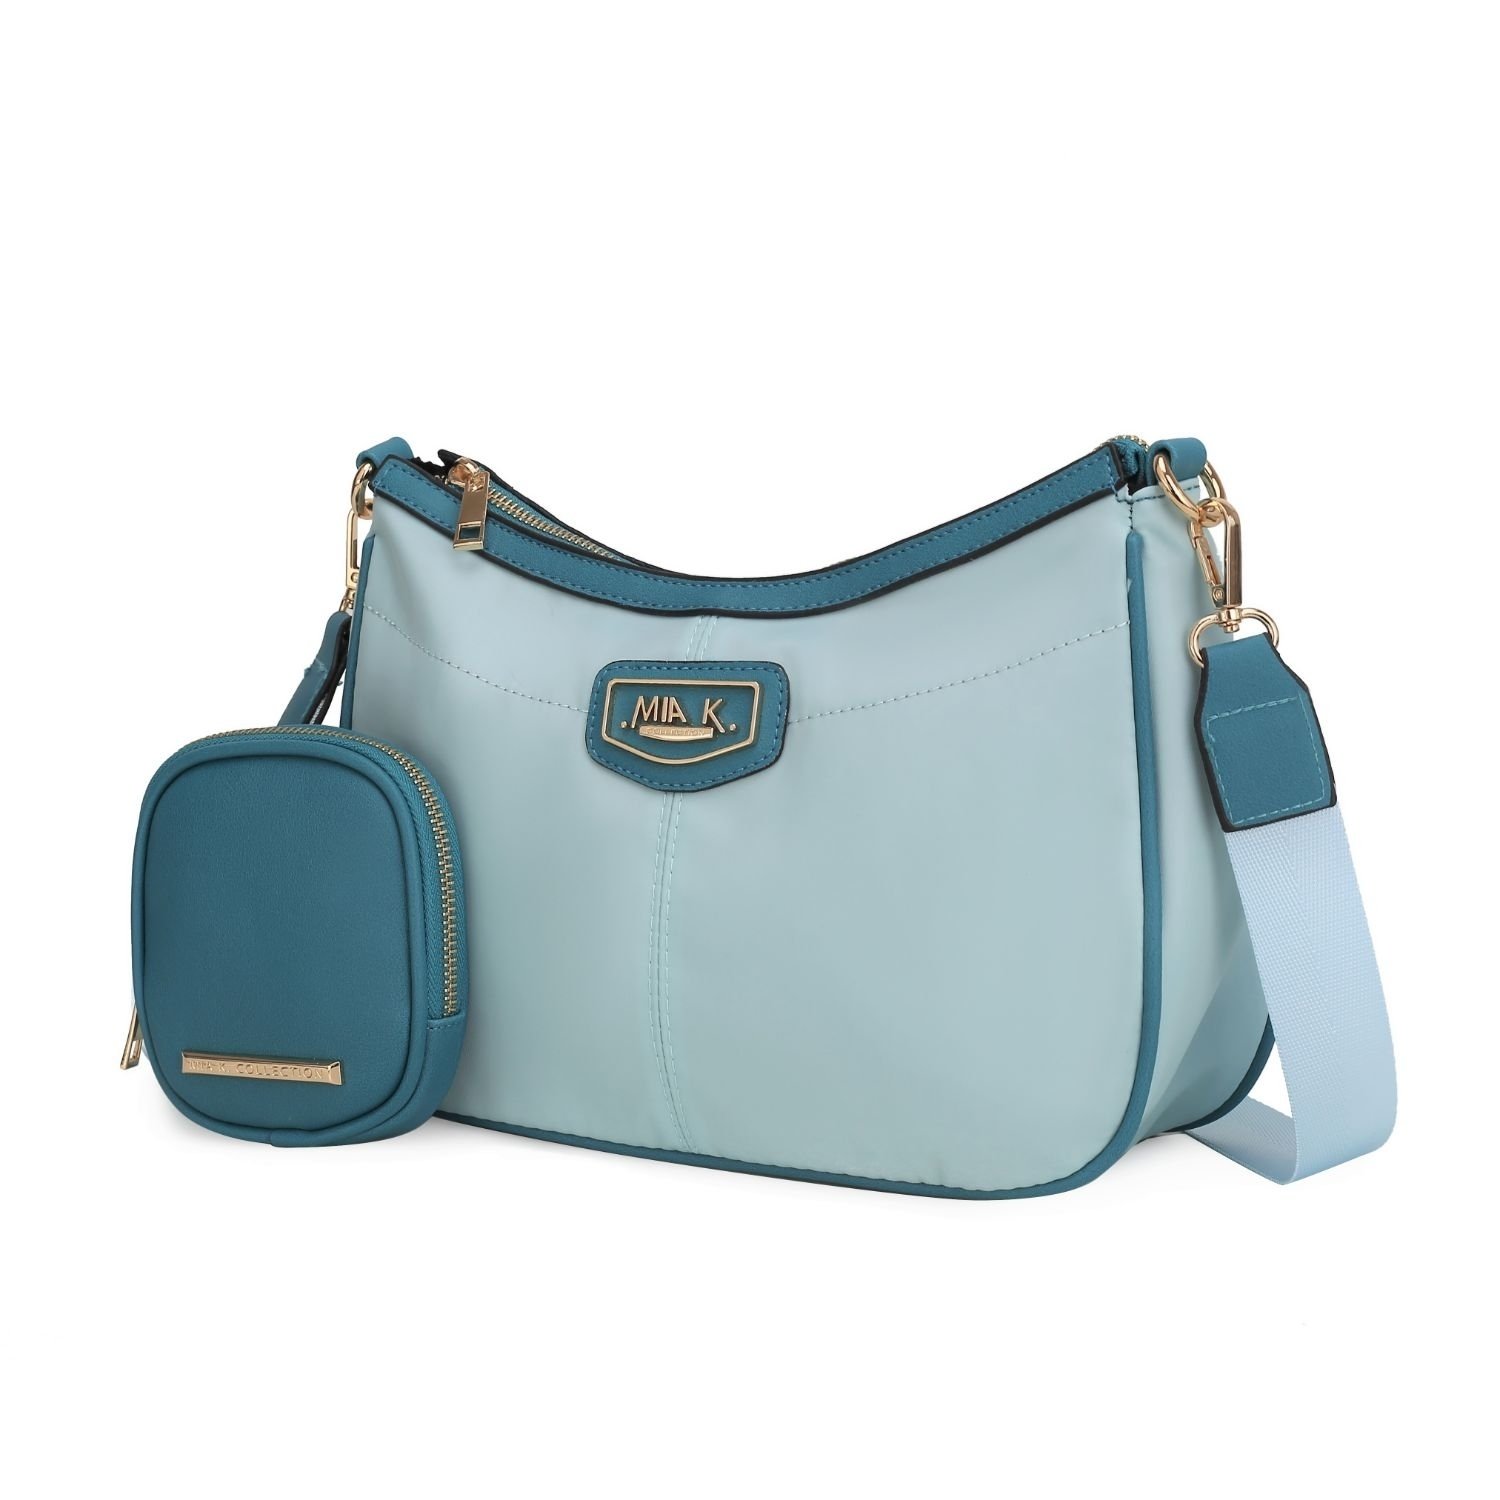 MKF Collection Freya 2-Pc Crossbody Handbag By Mia K - Wine - Blush